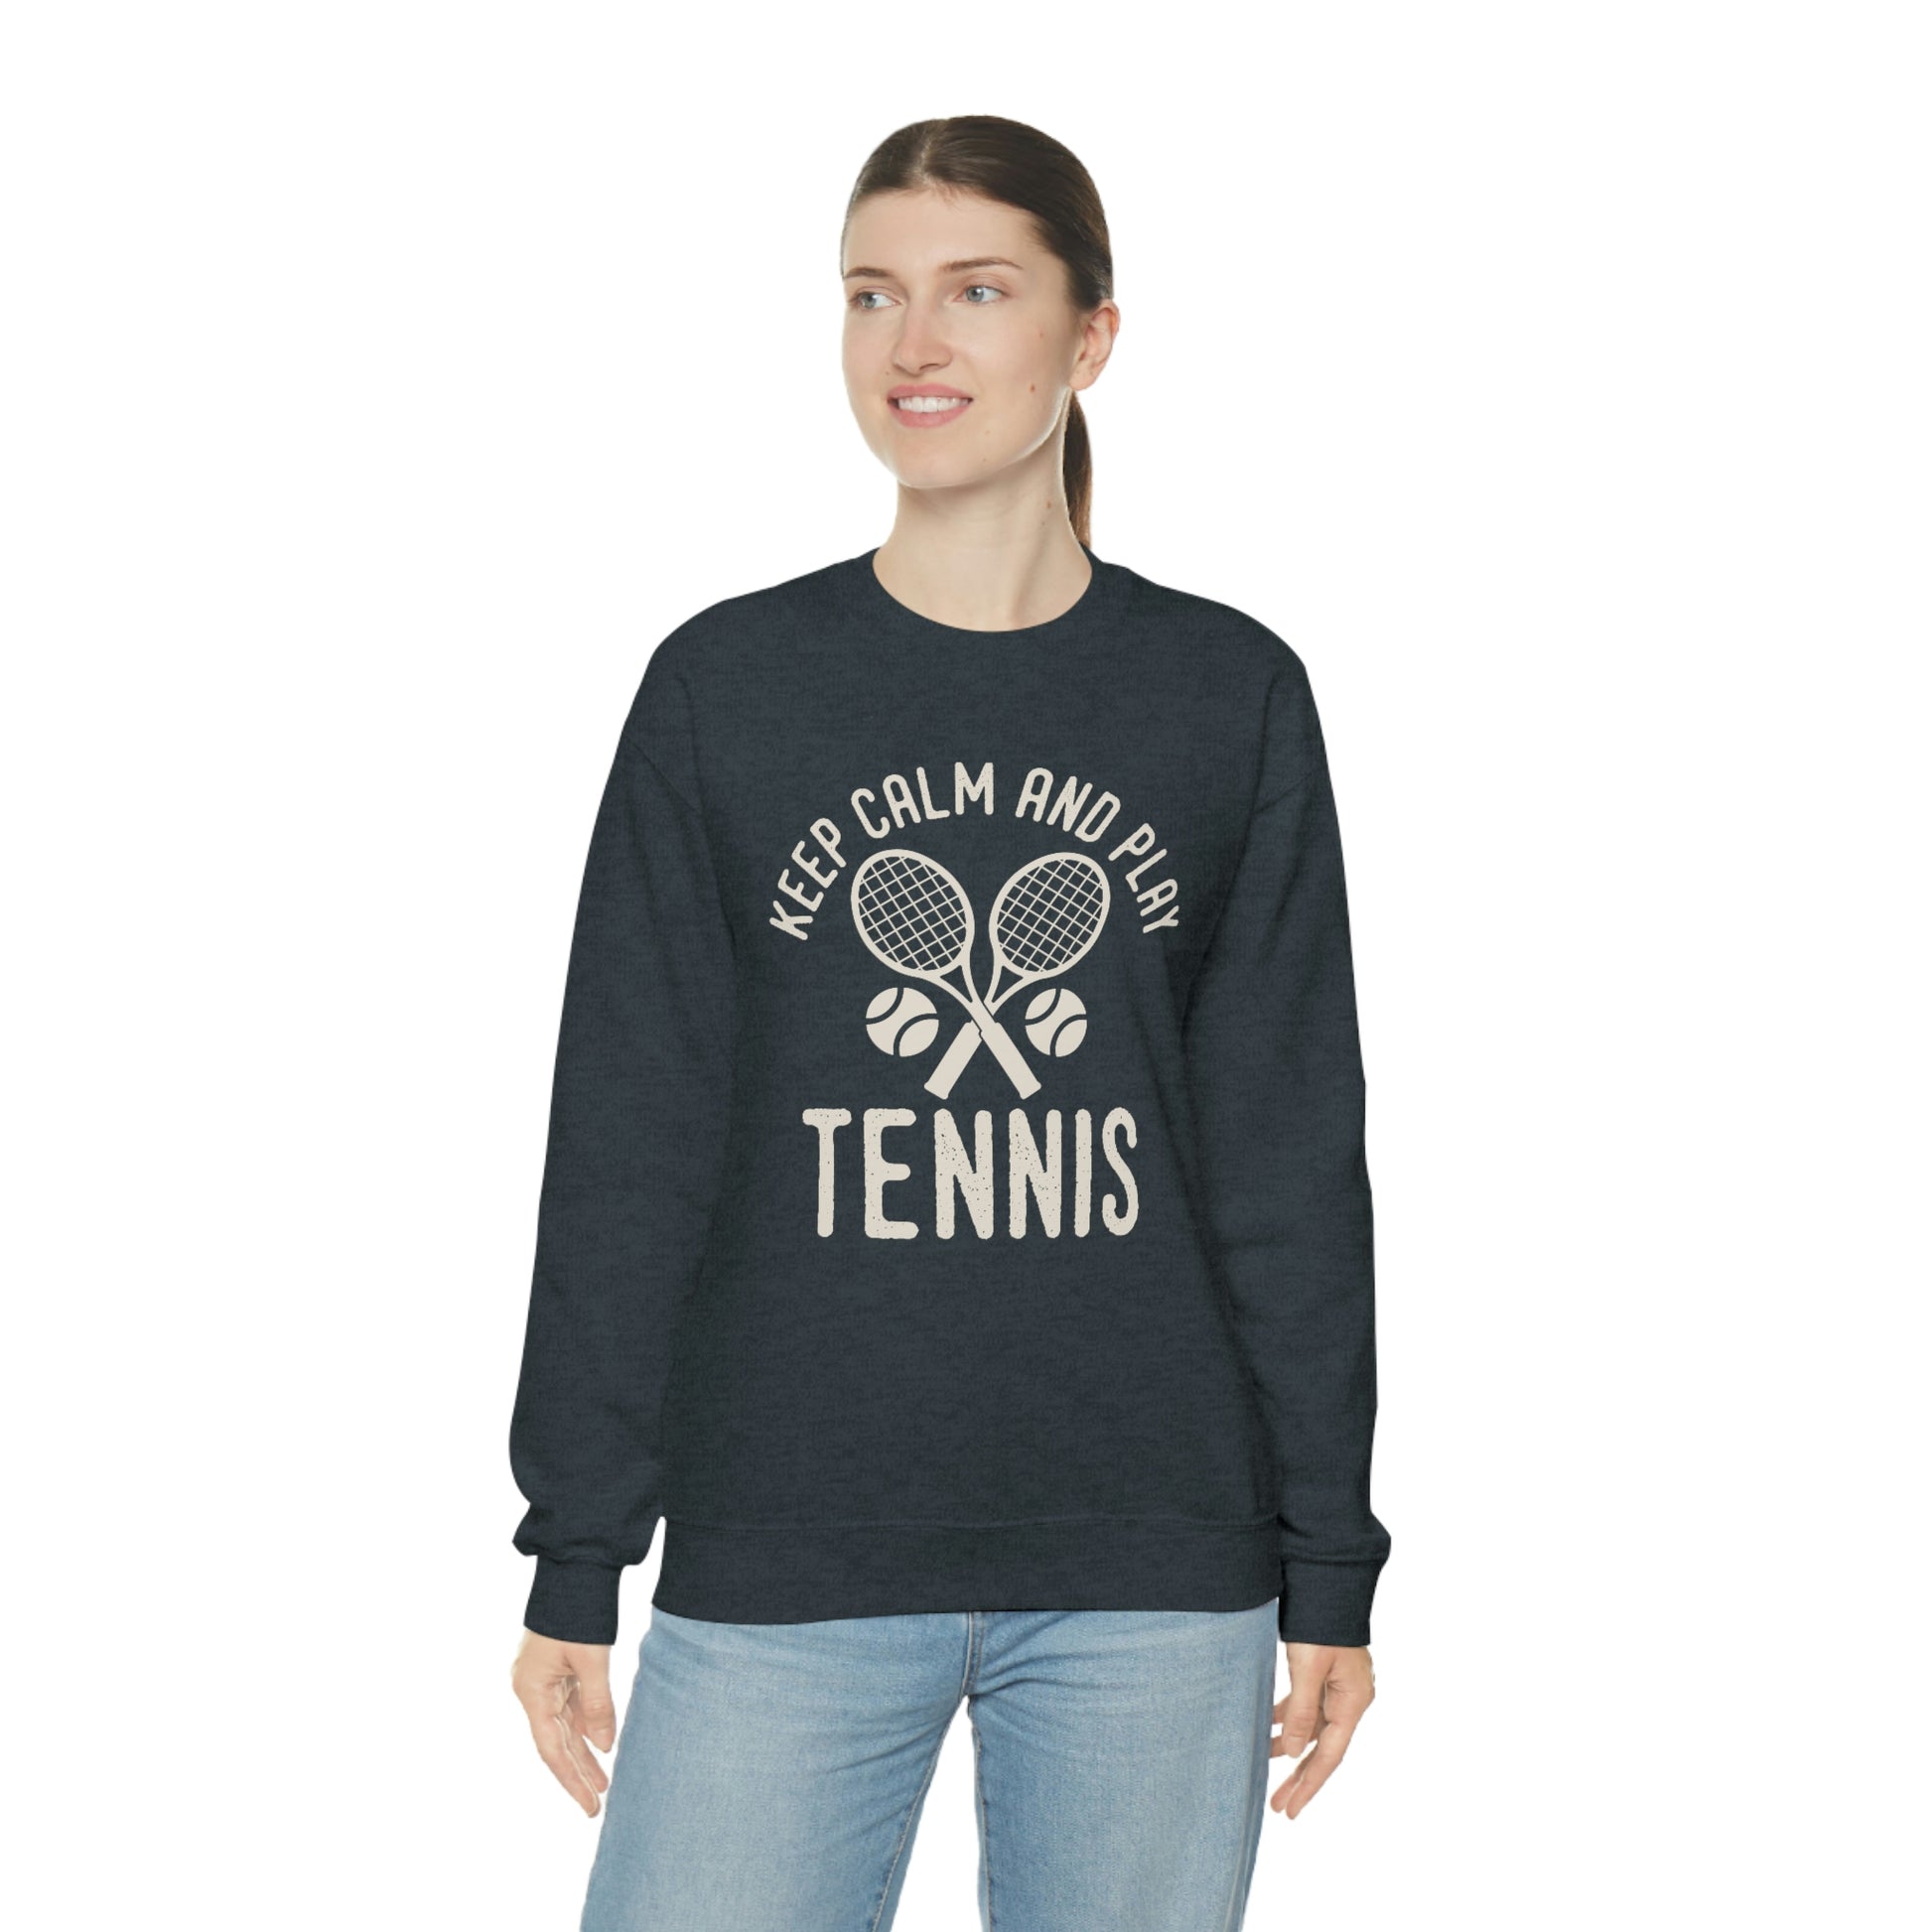 Tennis Sweatshirt, Funny Rackets Graphic Crewneck Fleece Cotton Sweater Jumper Pullover Men Women Adult Aesthetic Top Starcove Fashion